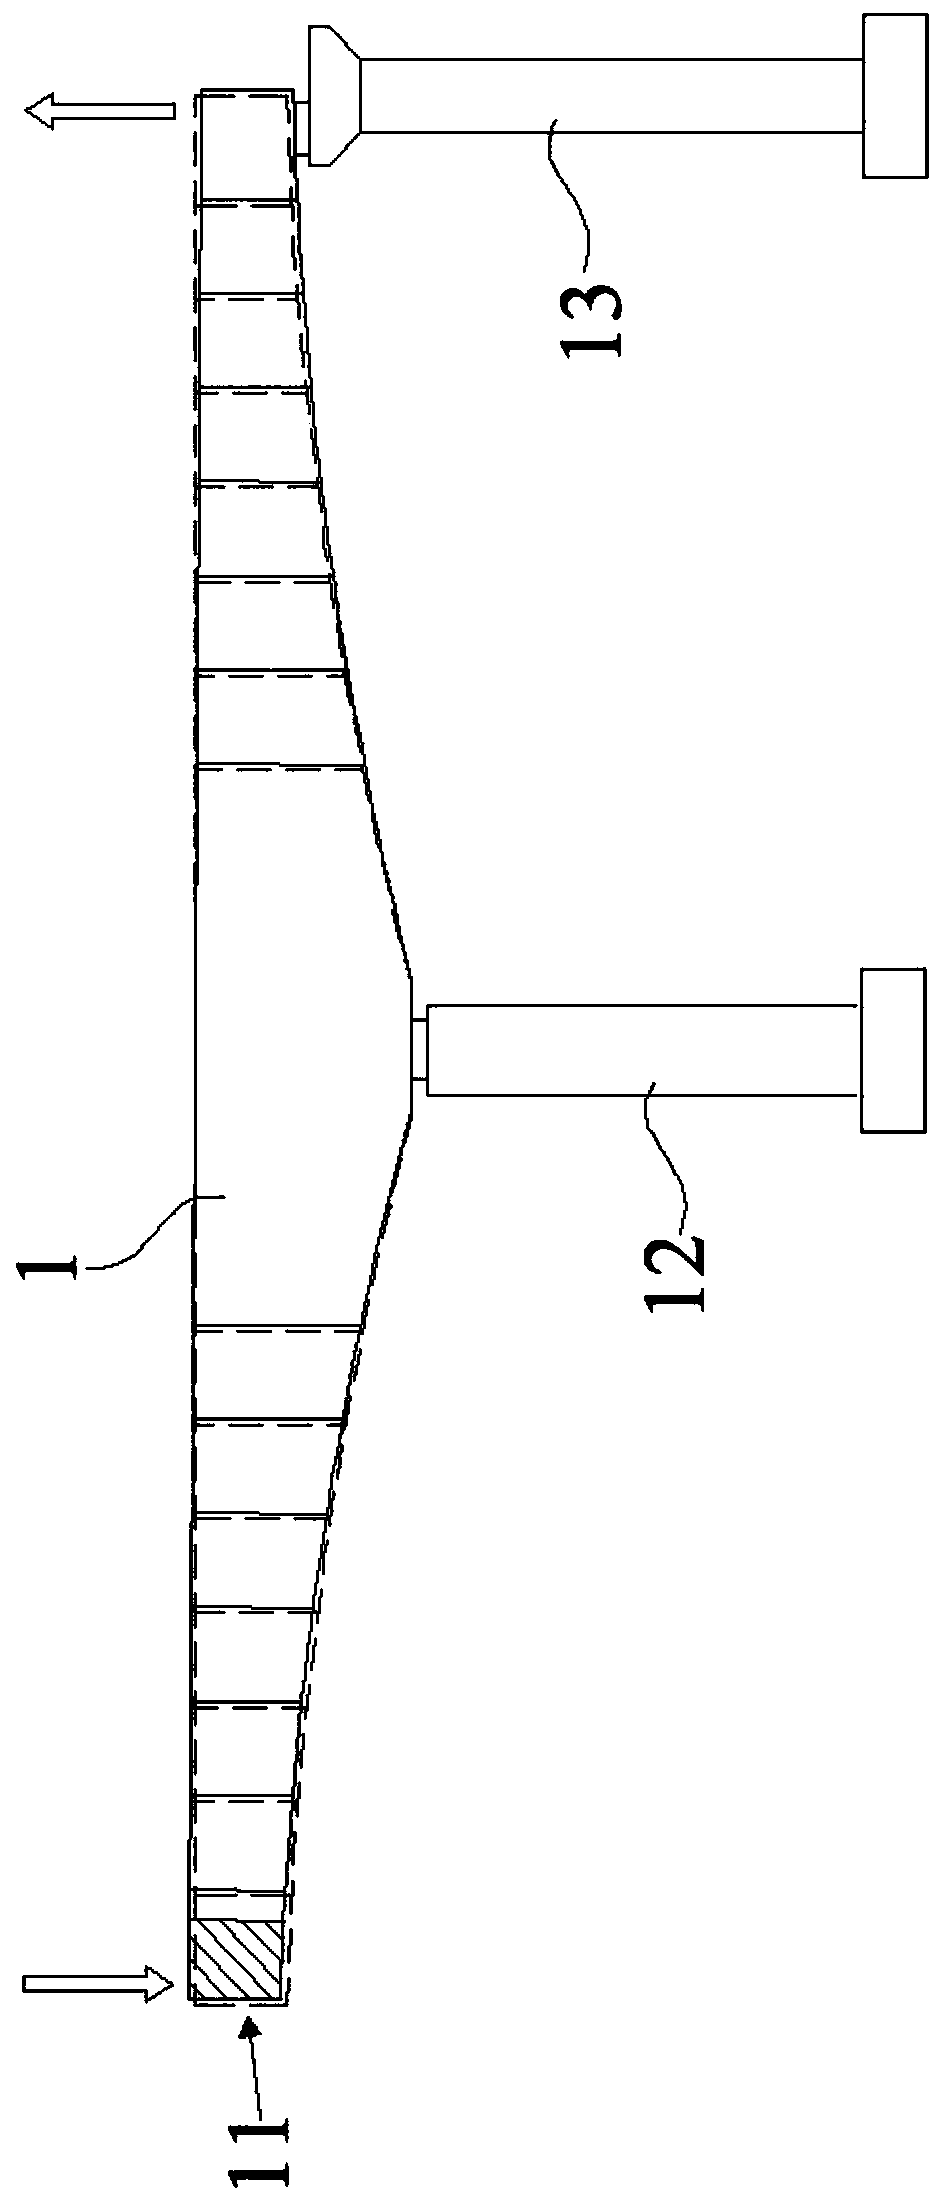 Method for adjusting bridge deck elevation and height limiting device